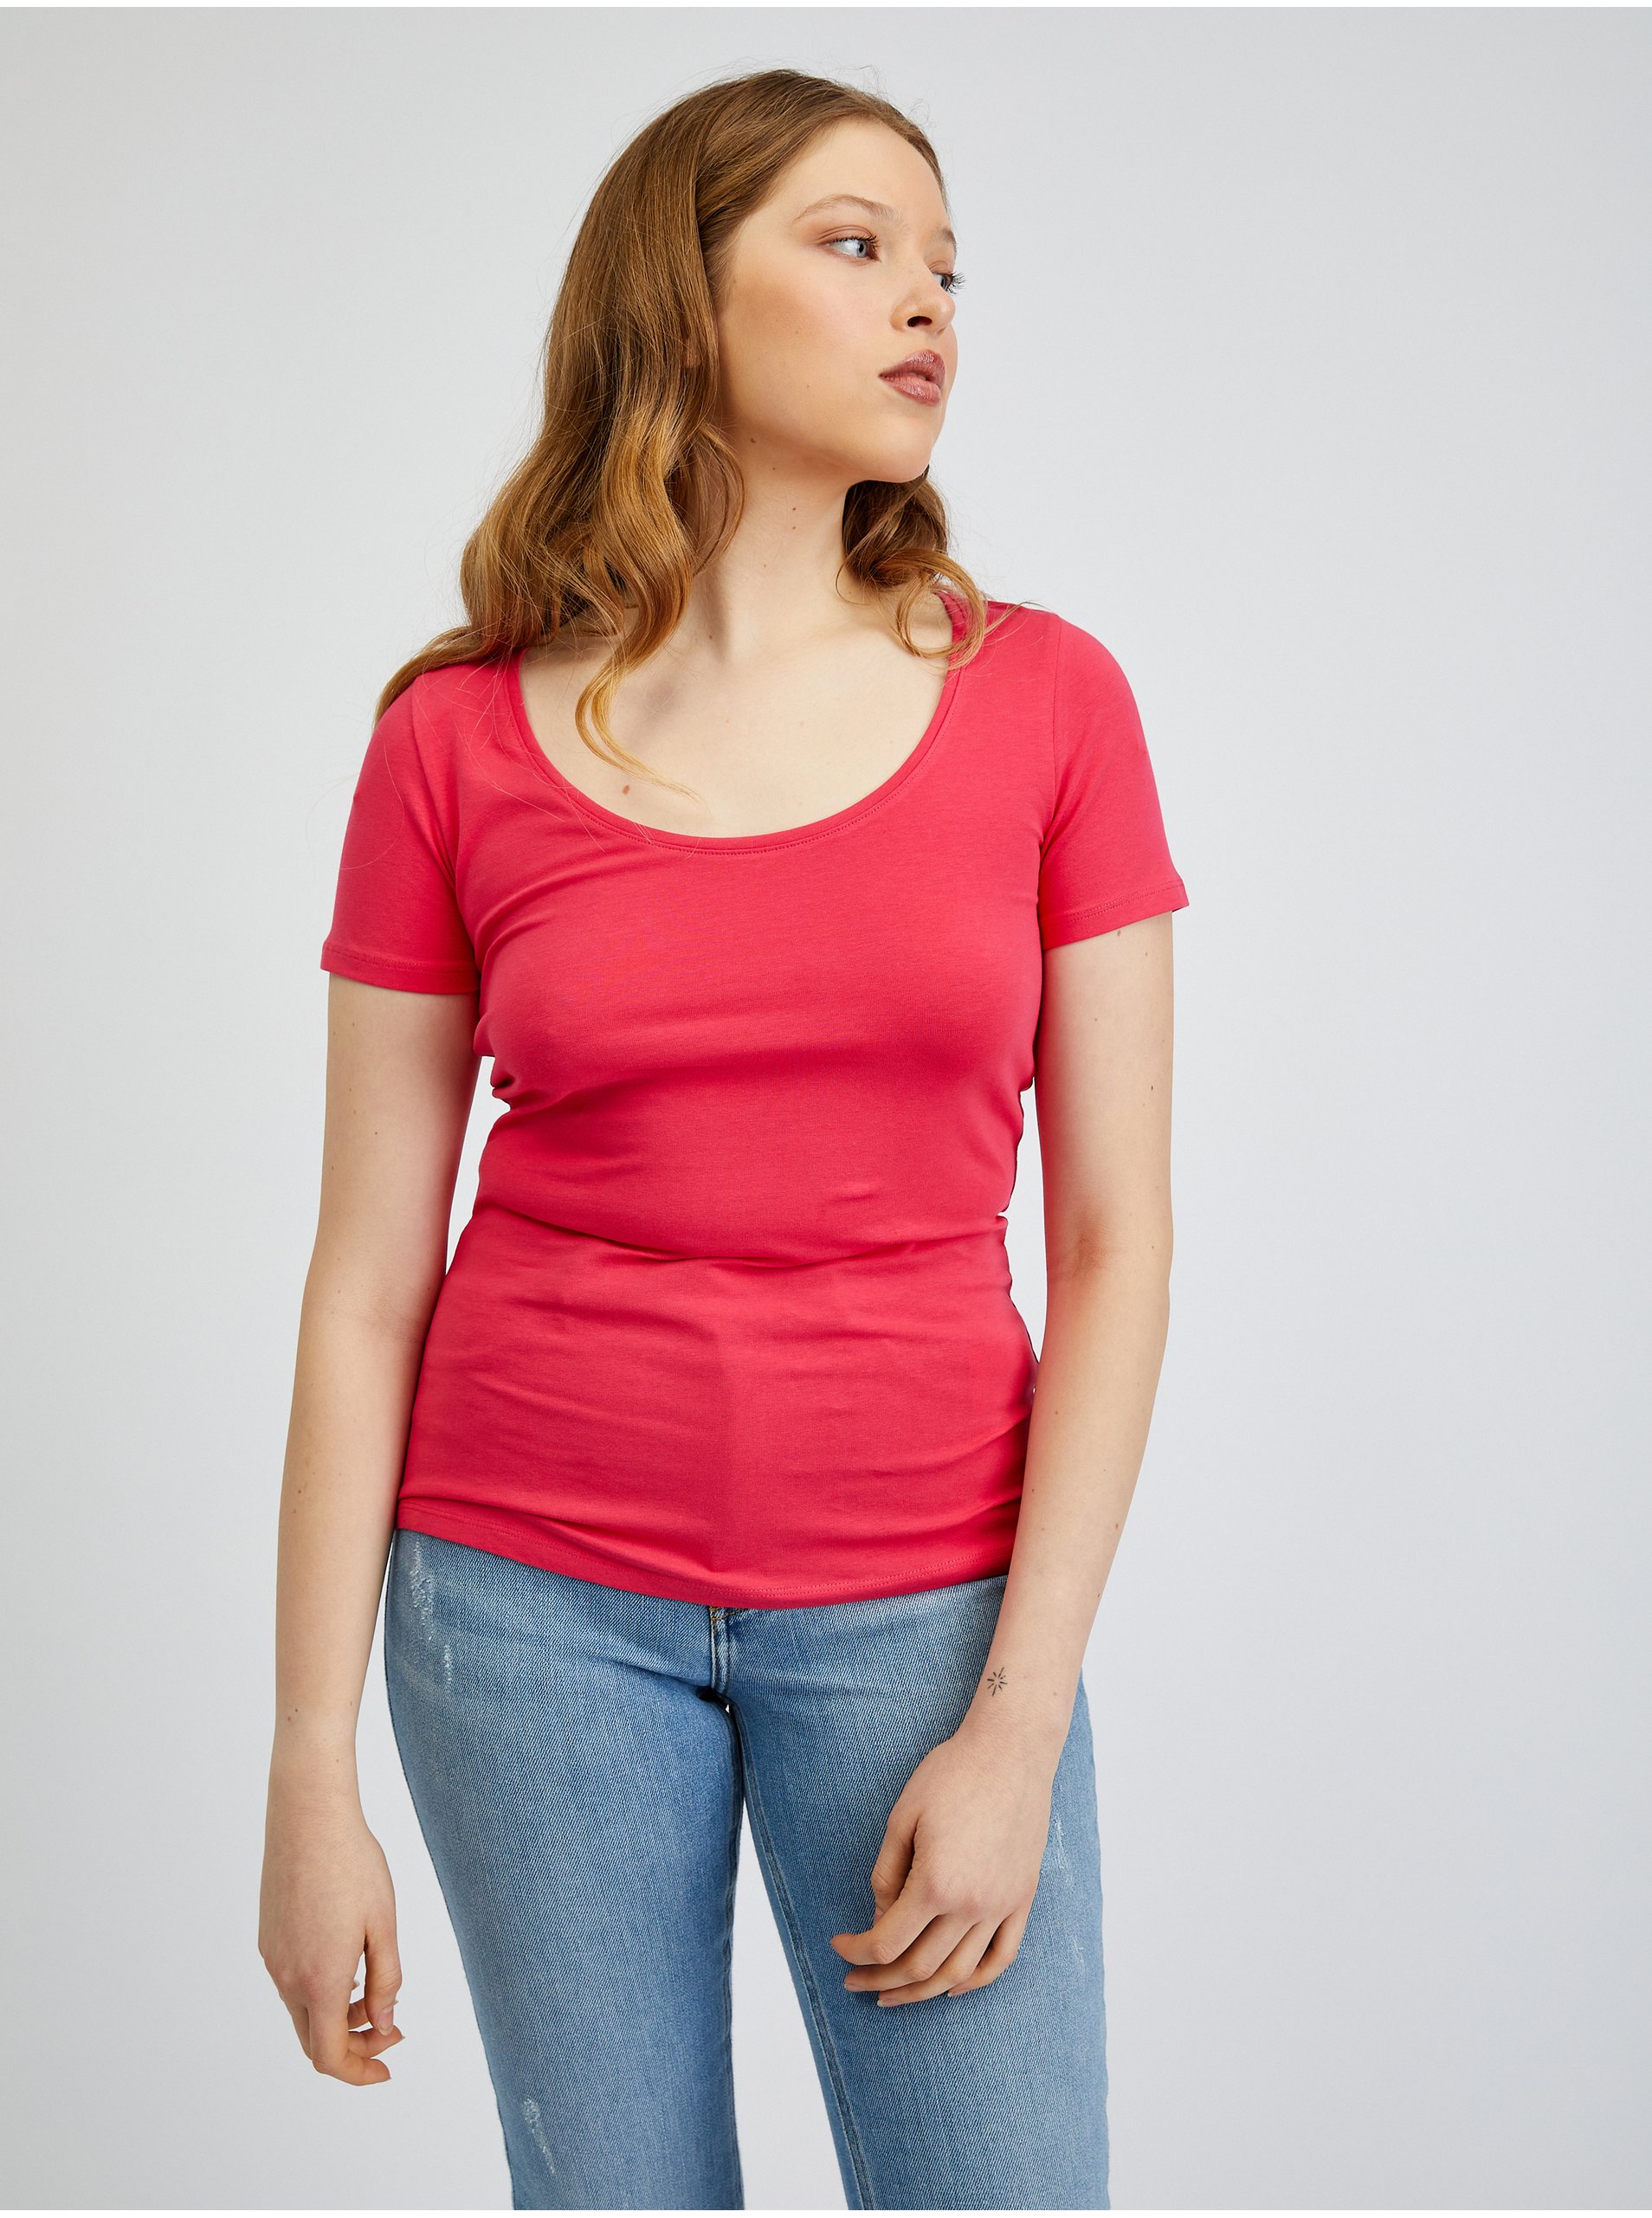 Lacno Basic tričká pre ženy ORSAY - tmavoružová